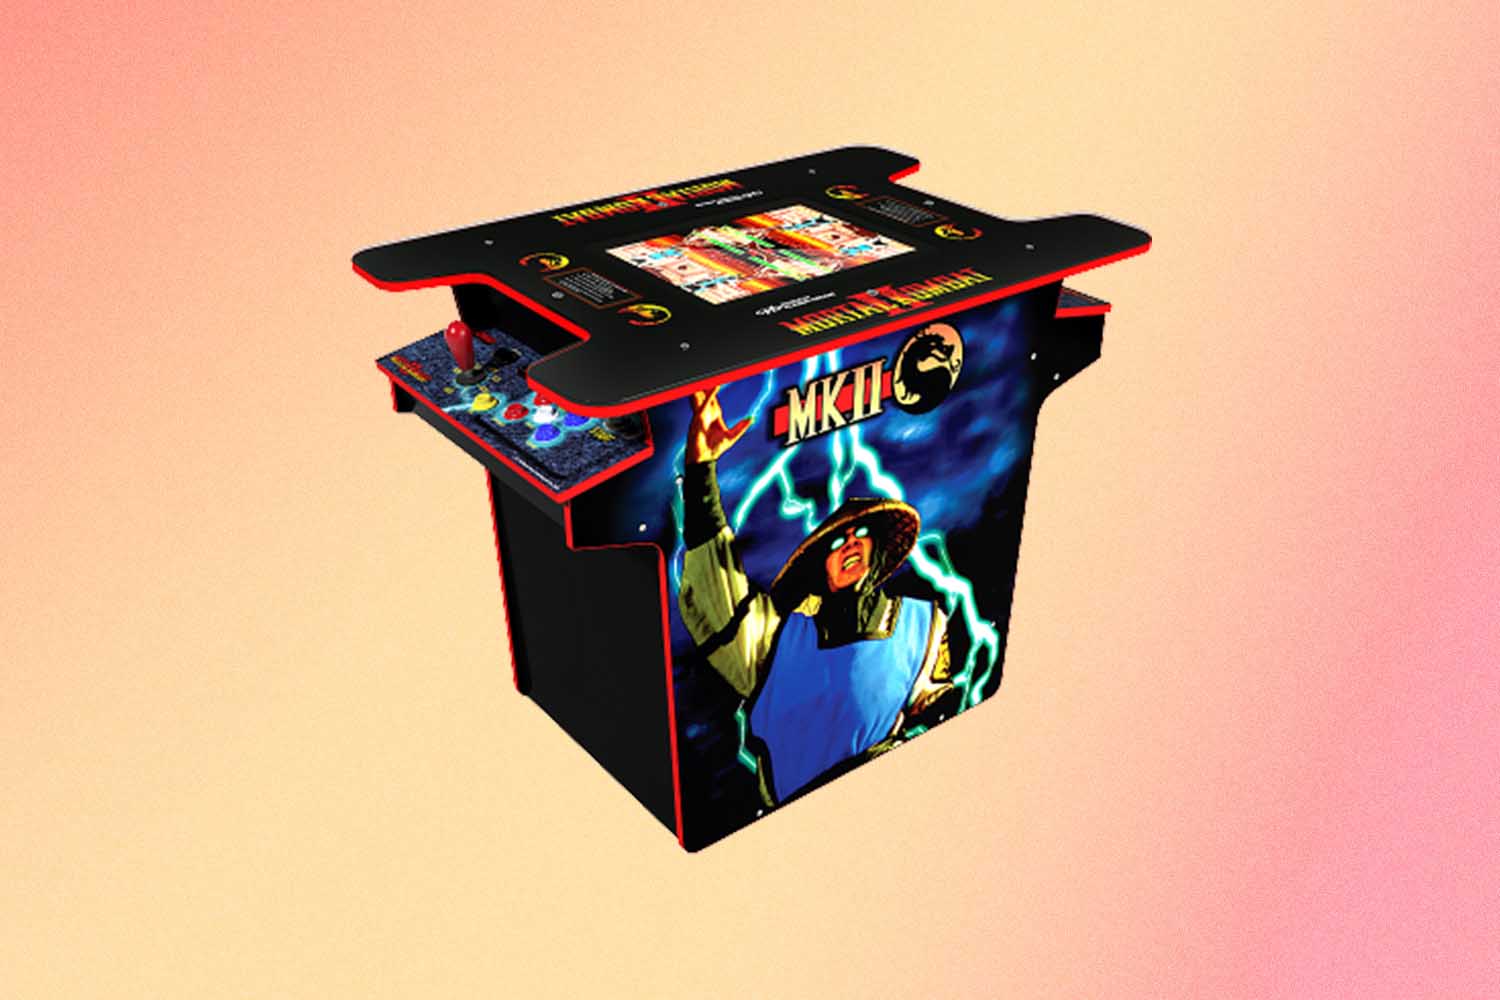 Arcade1Up - Mortal Kombat/Midway Gaming Table